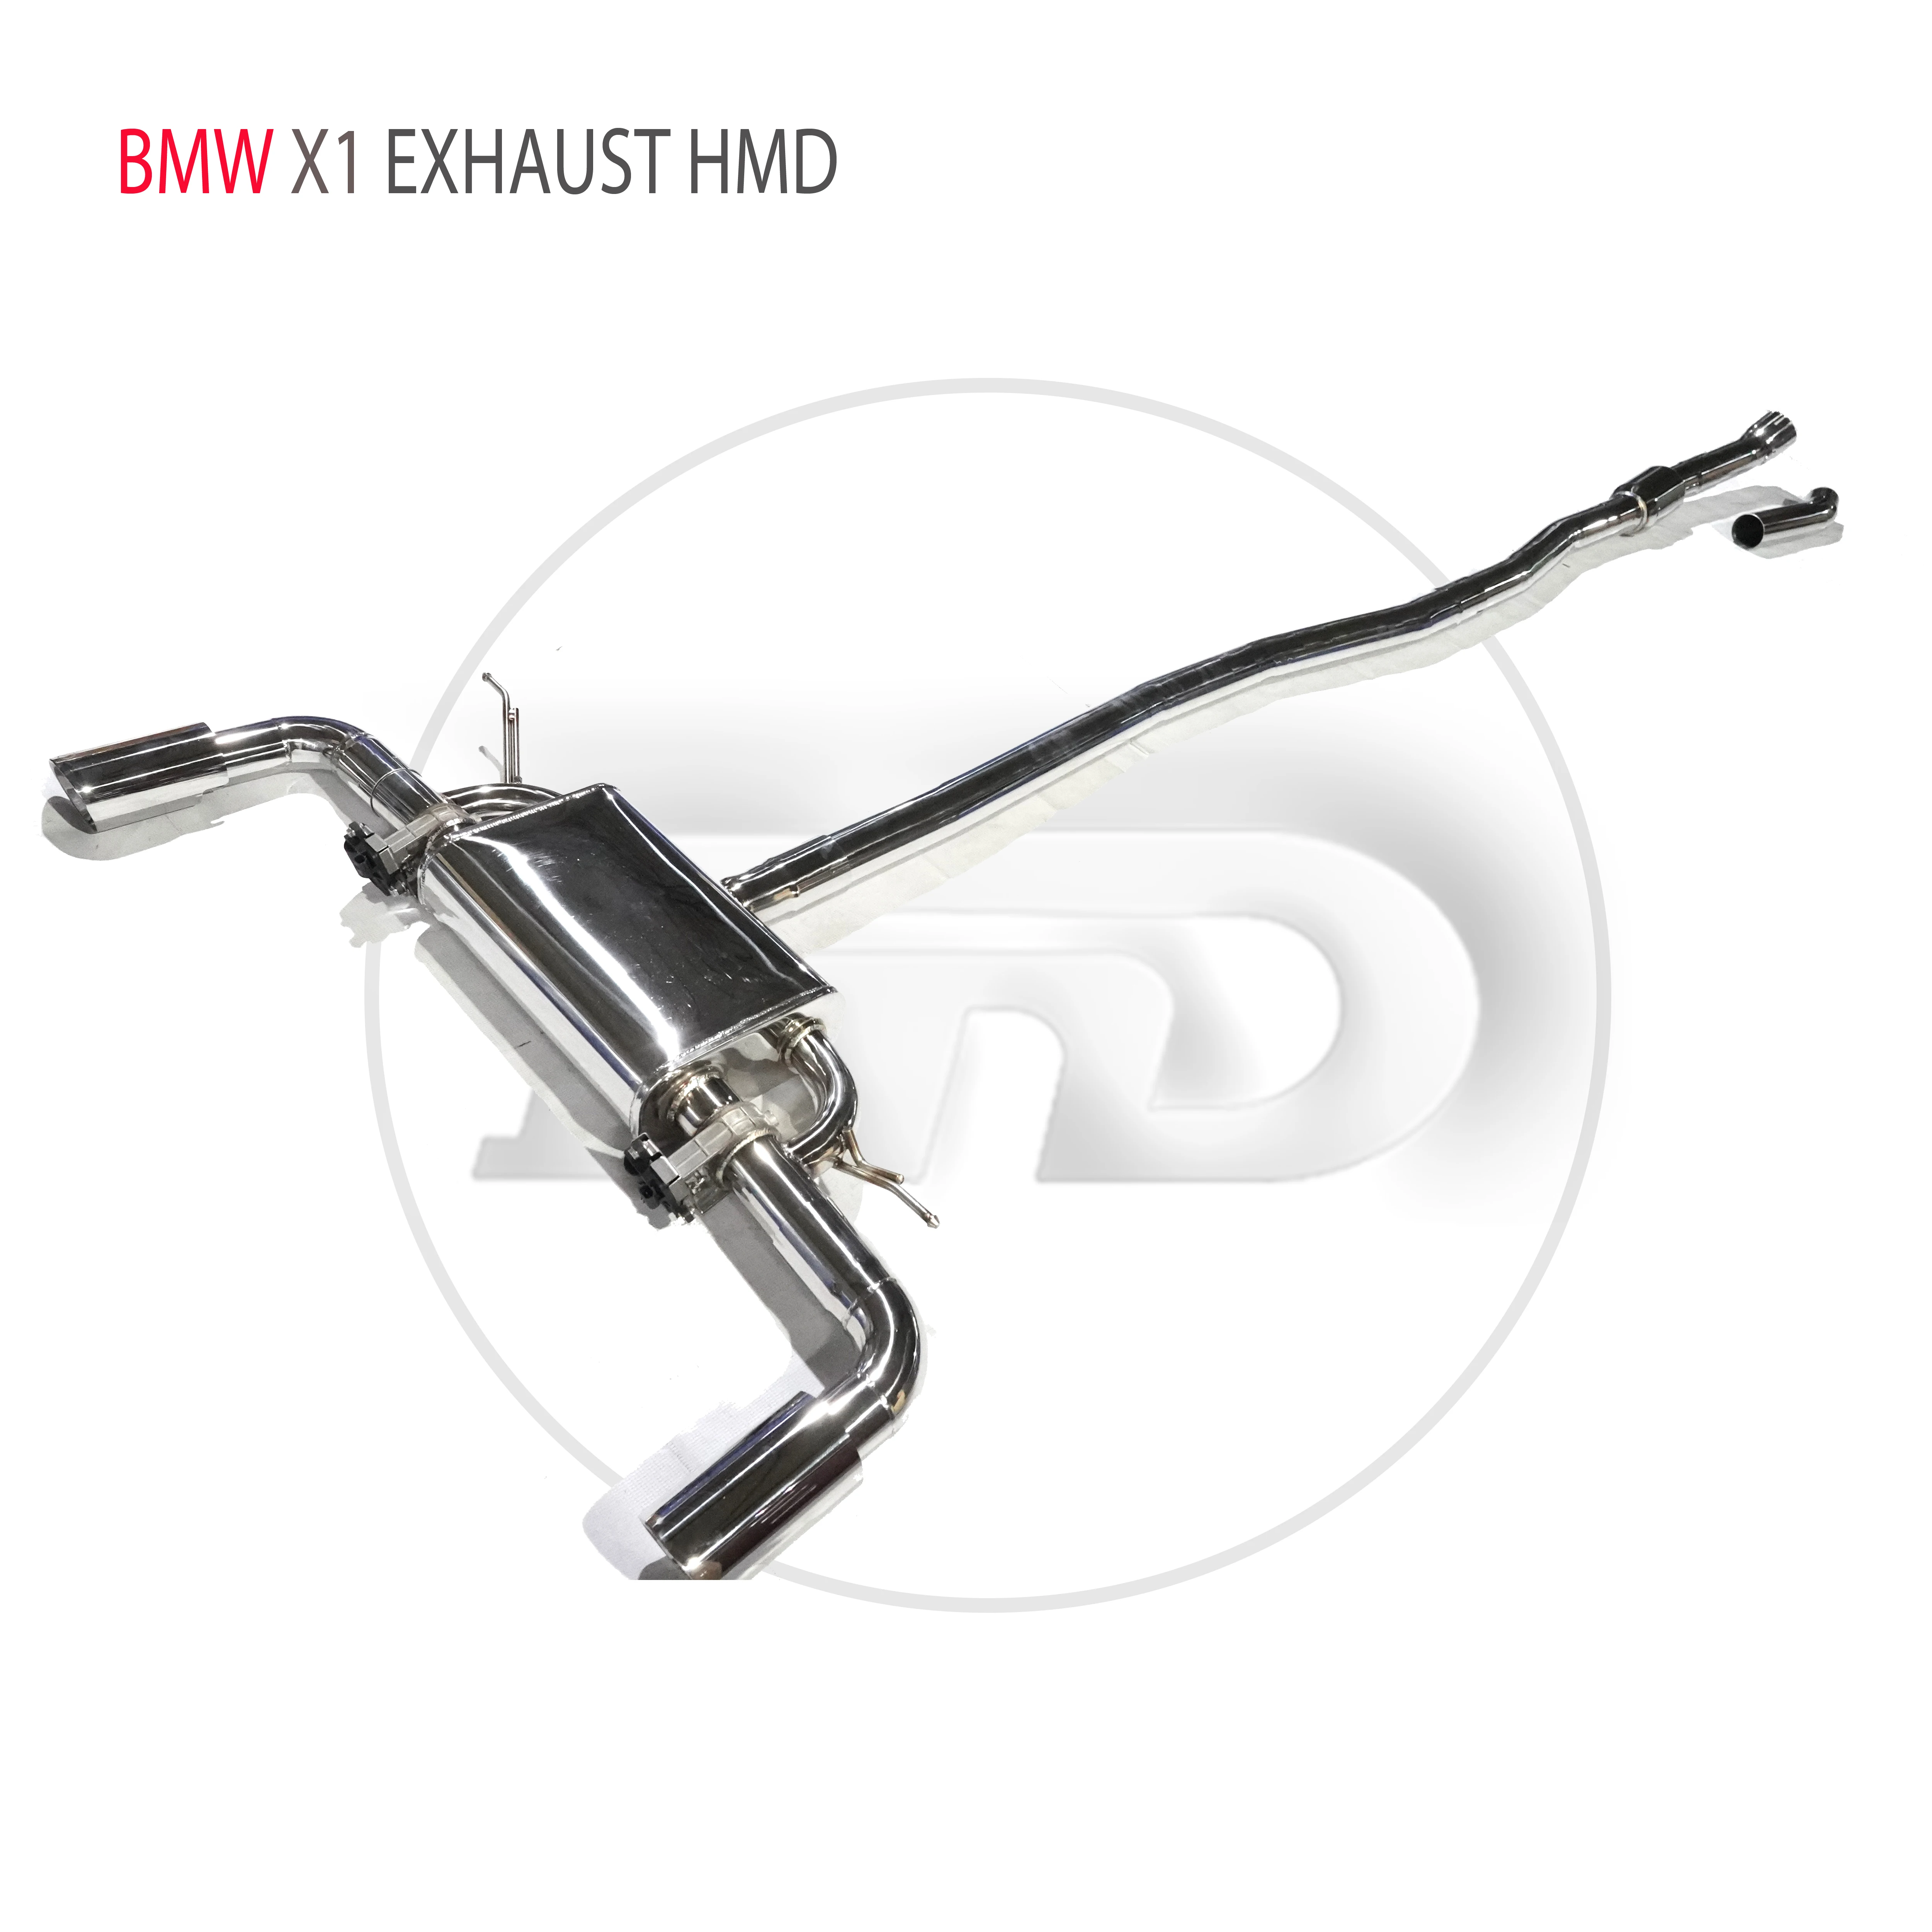 Купи HMD Stainless Steel Exhaust System Performance Catback for BMW X1 Auto Replacement Modification Electronic Valve за 57,798 рублей в магазине AliExpress